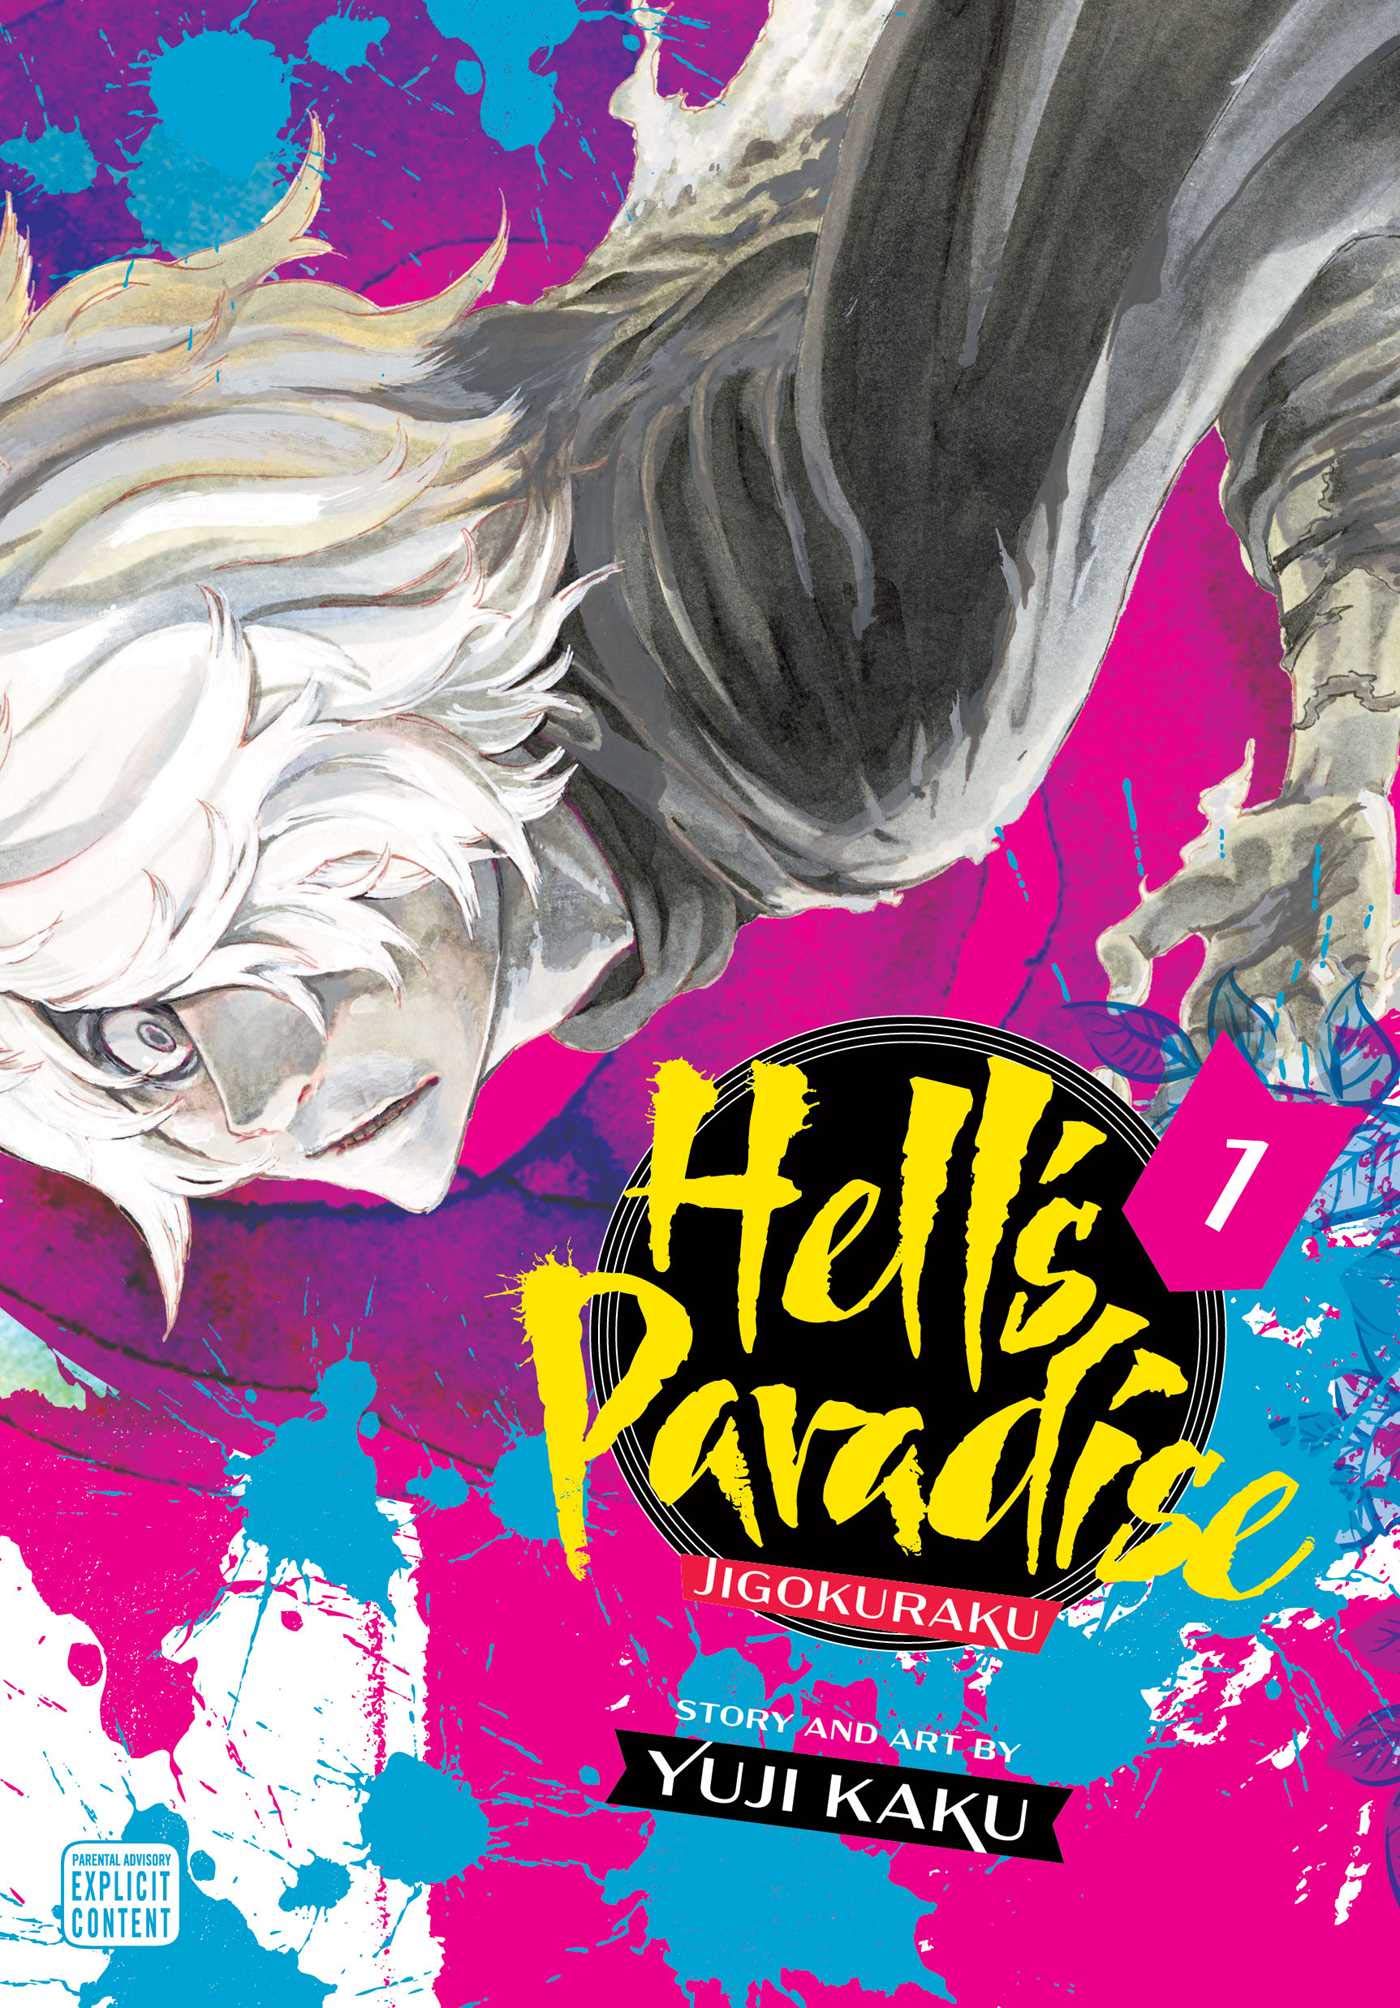 Hell's Paradise: Jigokuraku Manga Gets an Anime Adaptation-demhanvico.com.vn